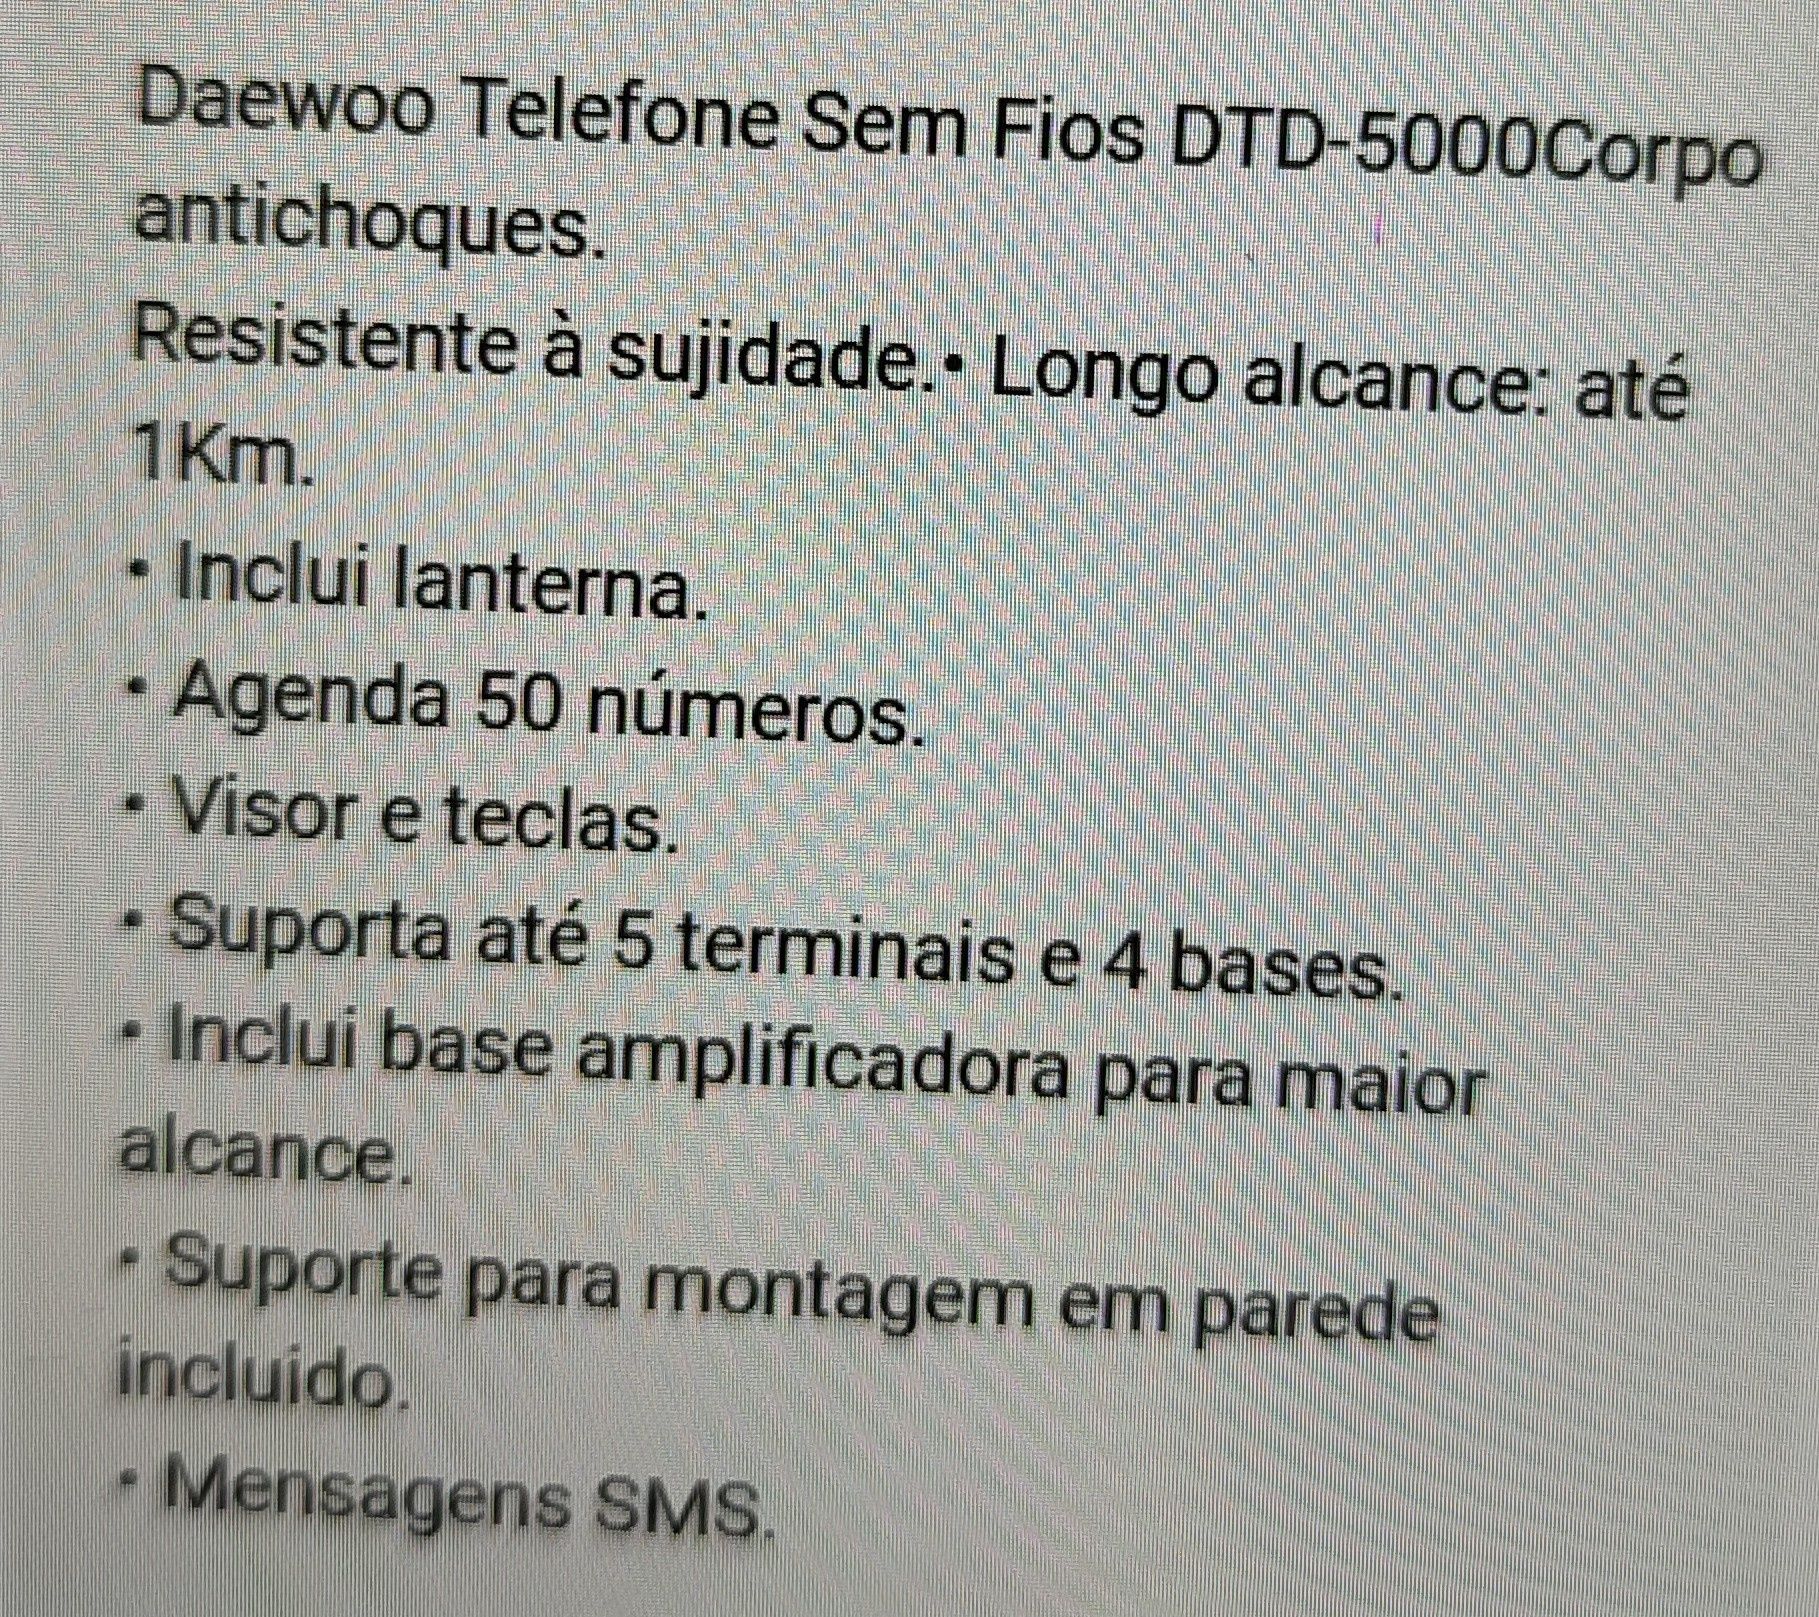 Telefone sem fios Daewoo DTD-5000